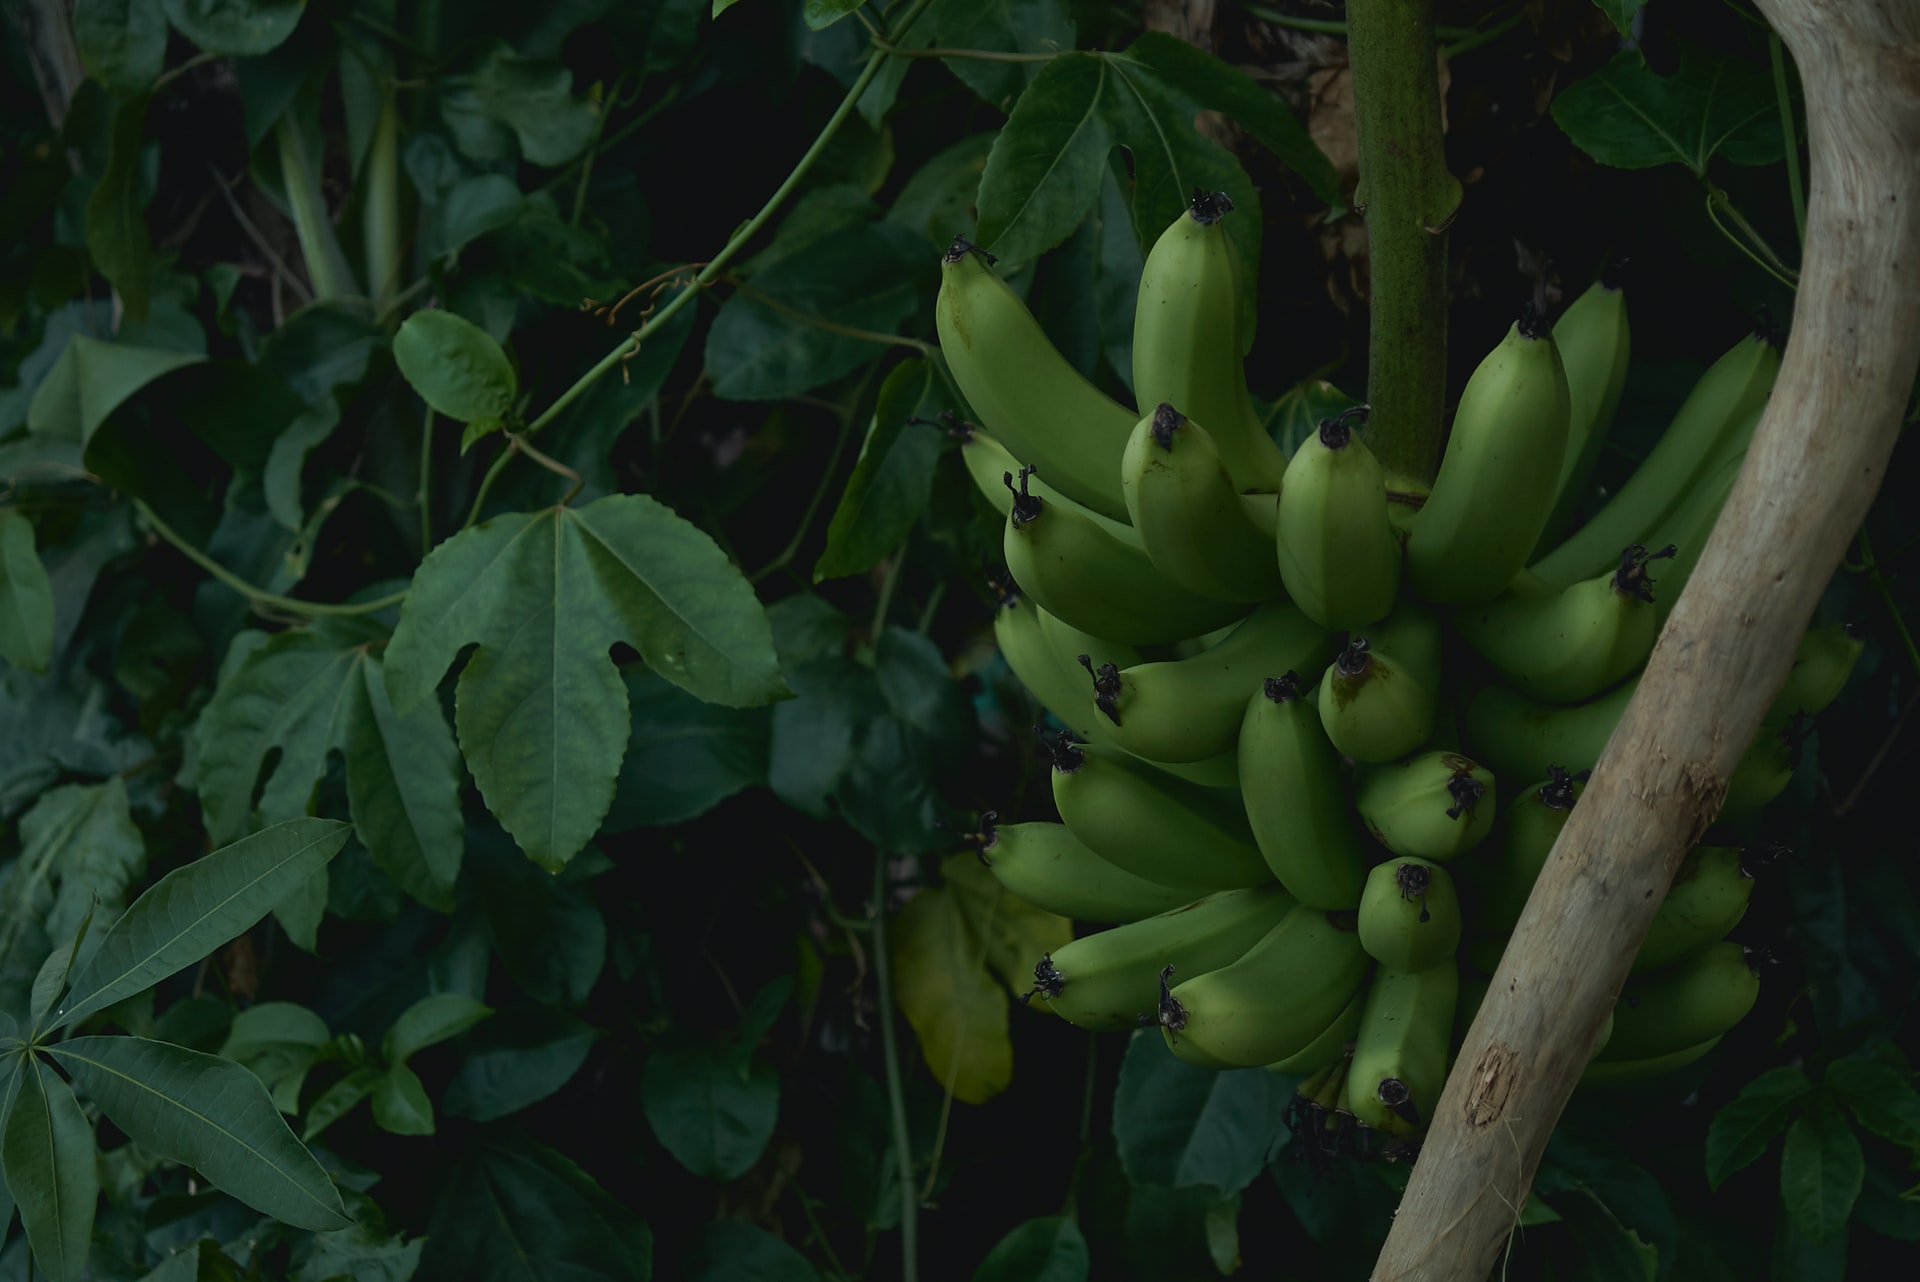 cluster of unripe banana fruit near green plants at daytime